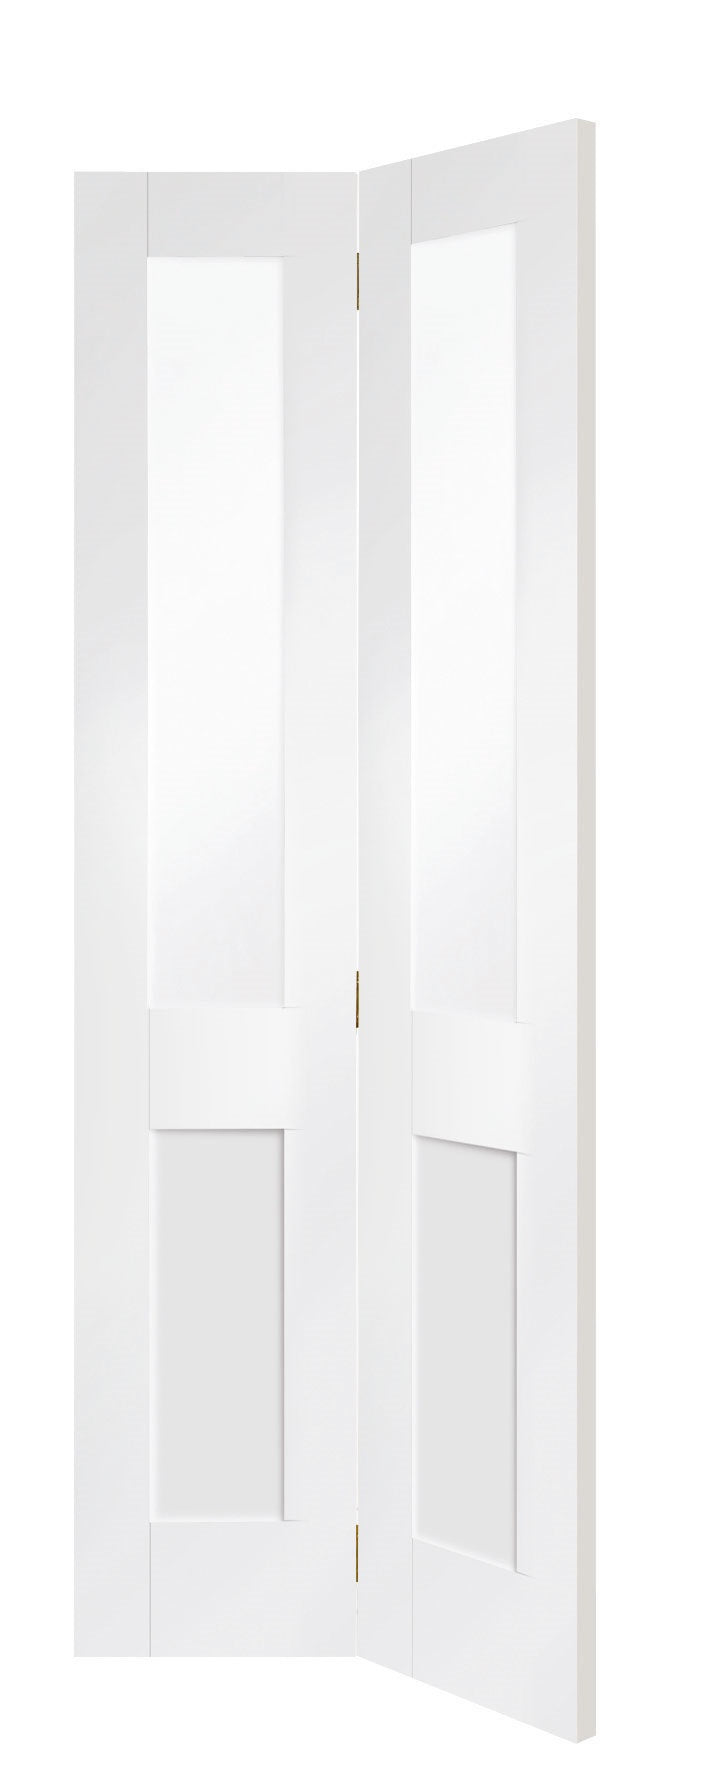 Malton shakerinternal  bifold doors with clear glass, primed white. 